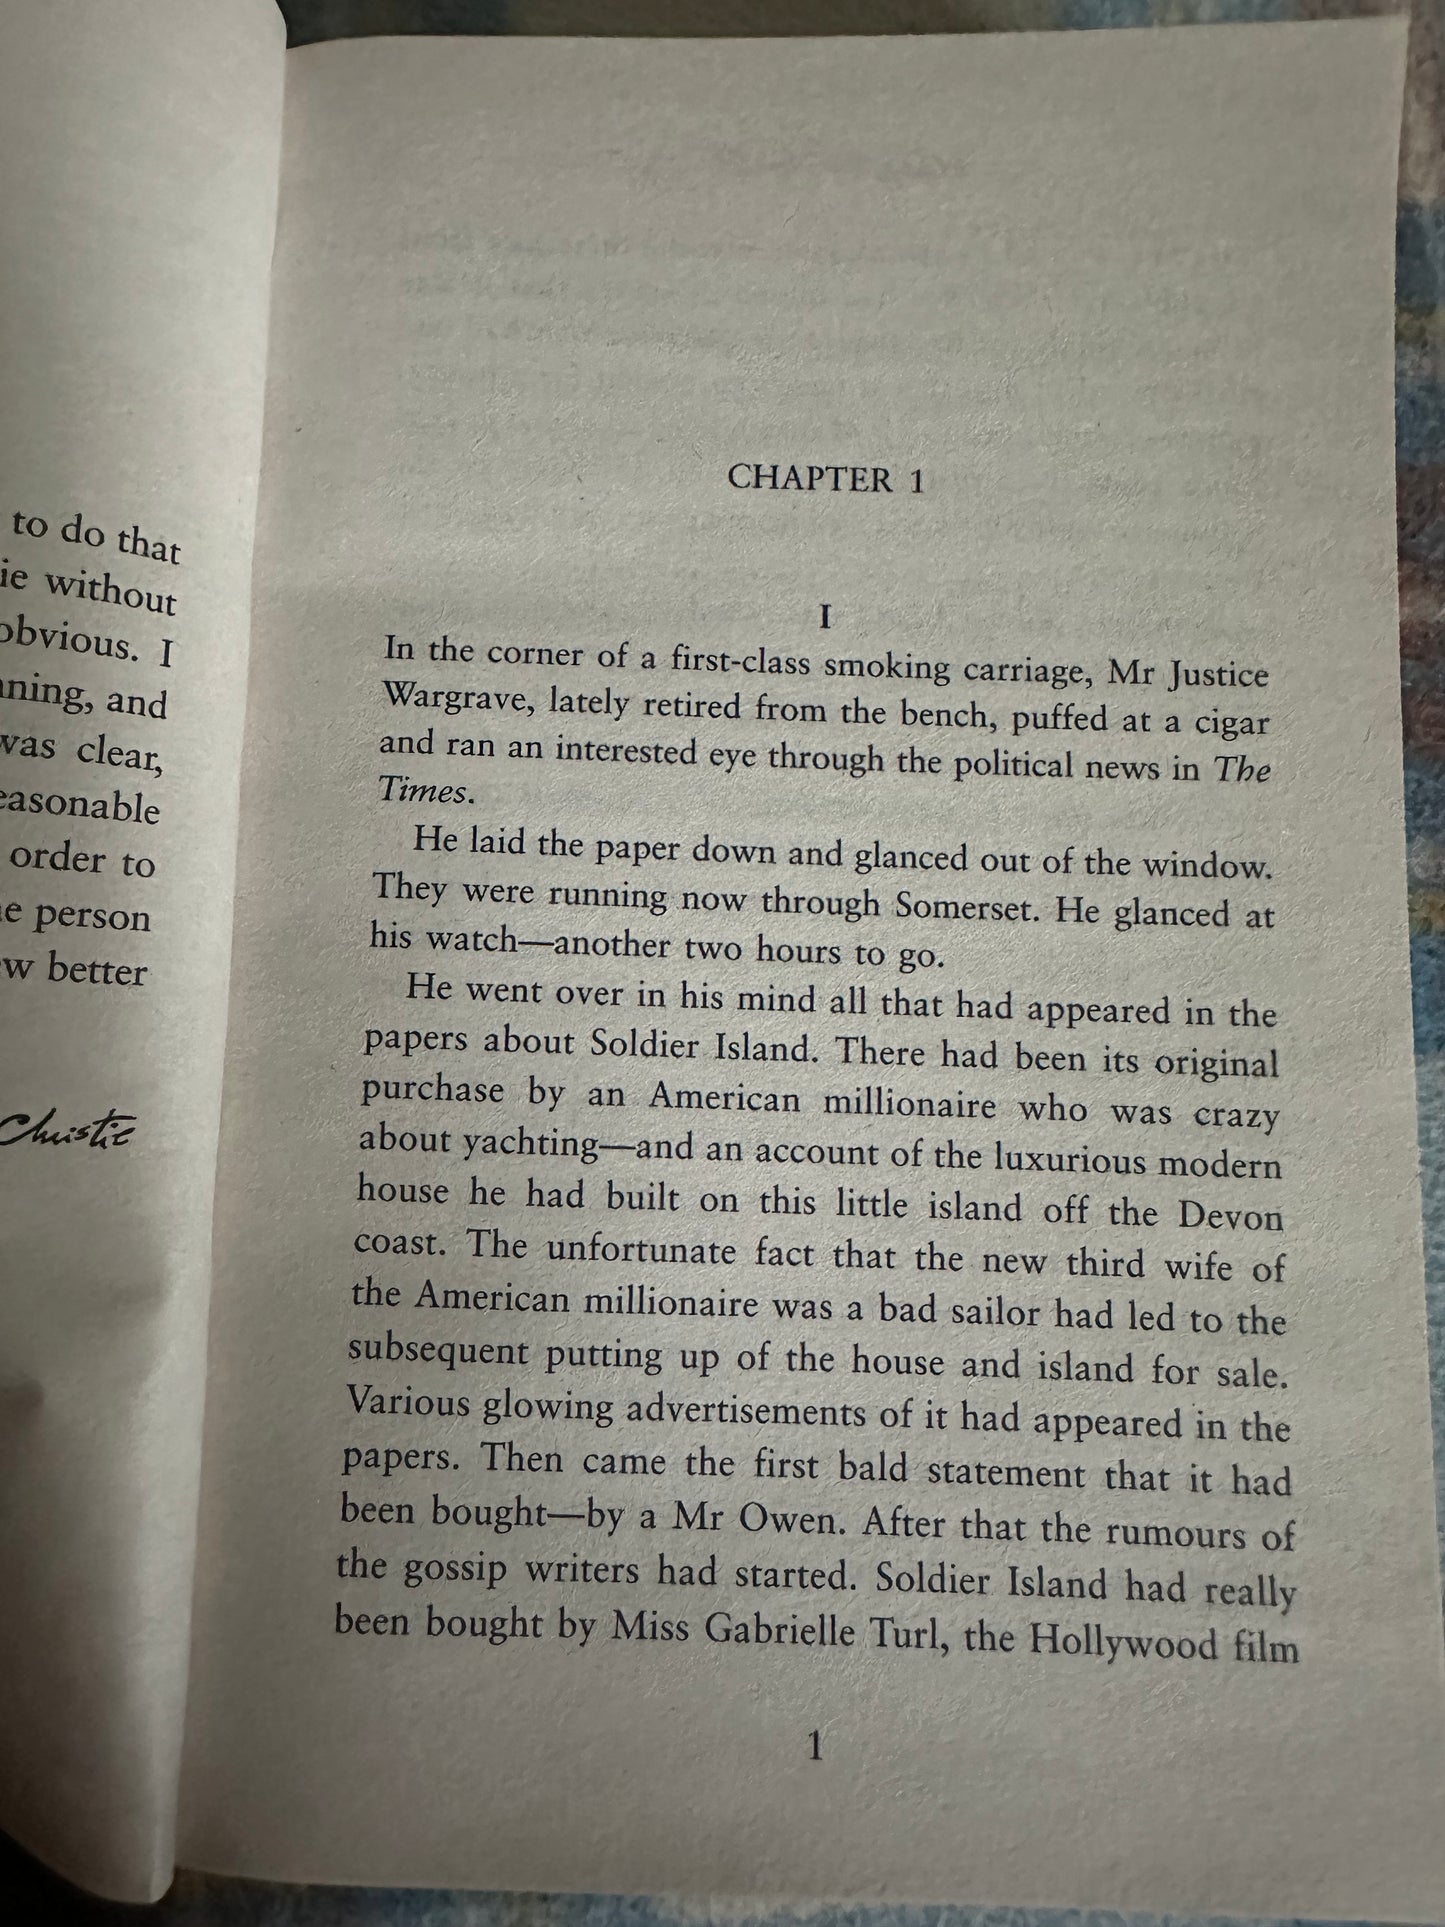 2015 And Then There Were None - Agatha Christie (HarperCollins)